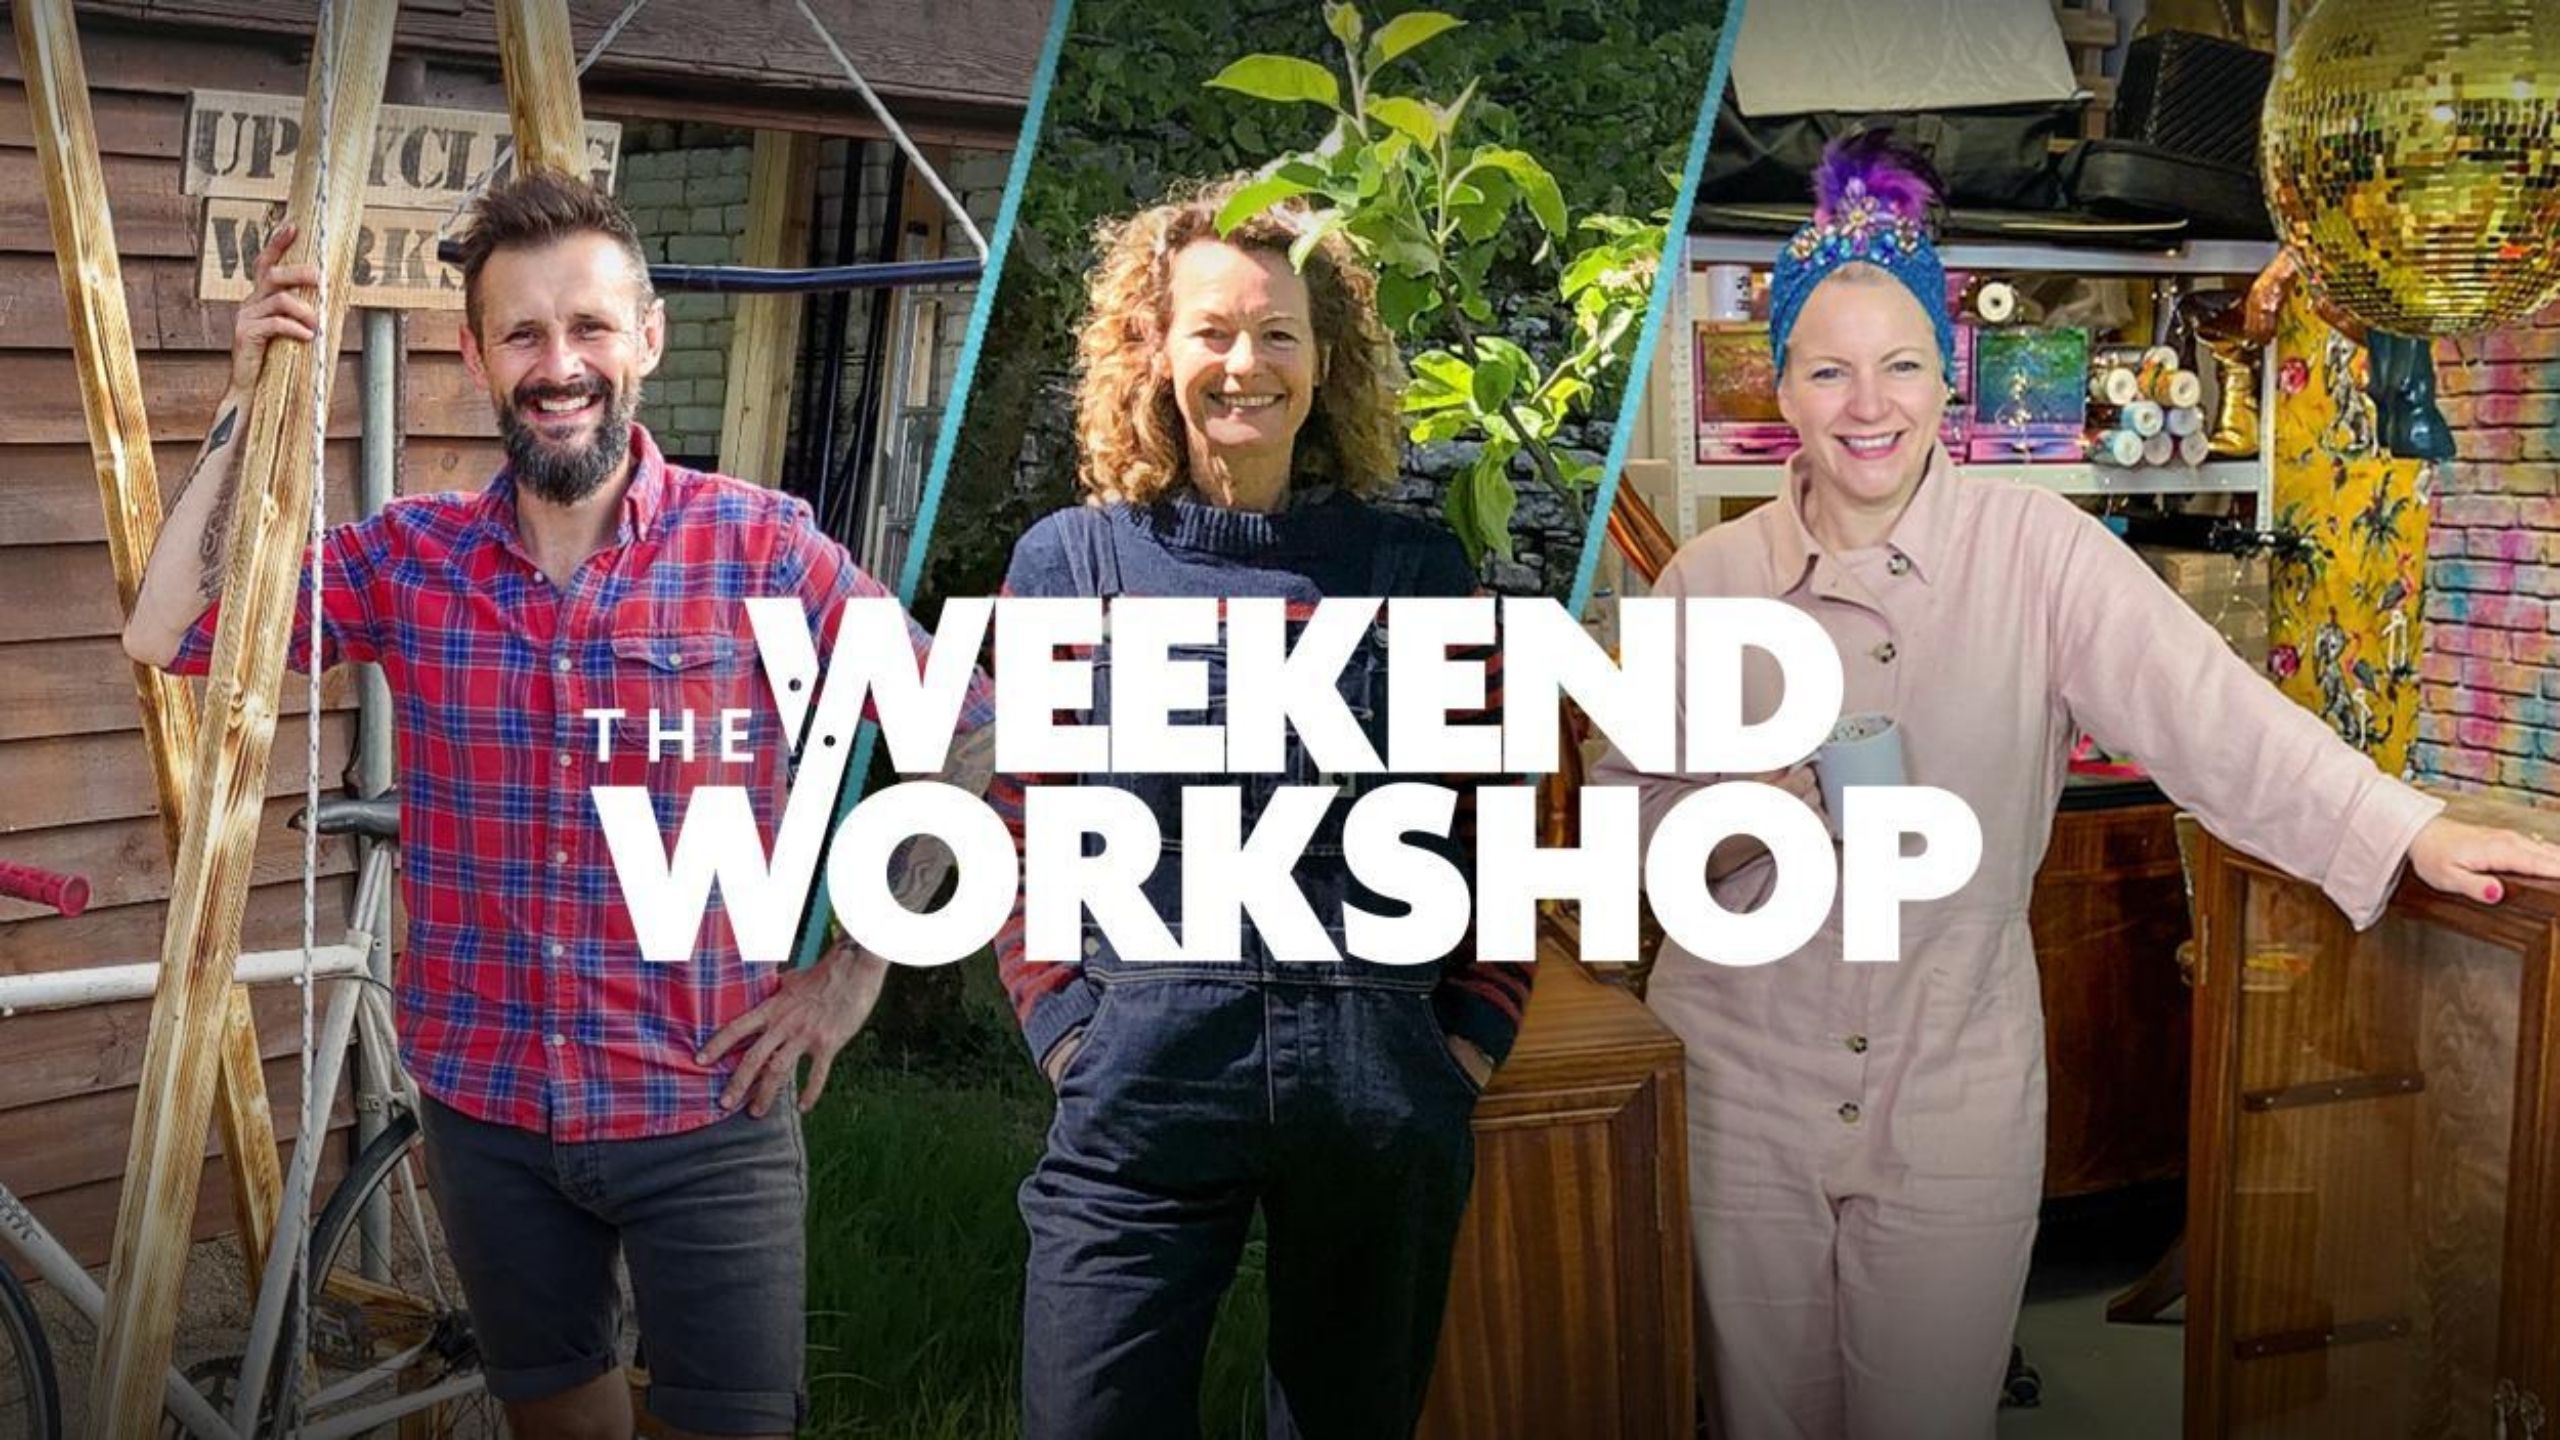 The three presenters of Weekend Workshop in their homes in a split image